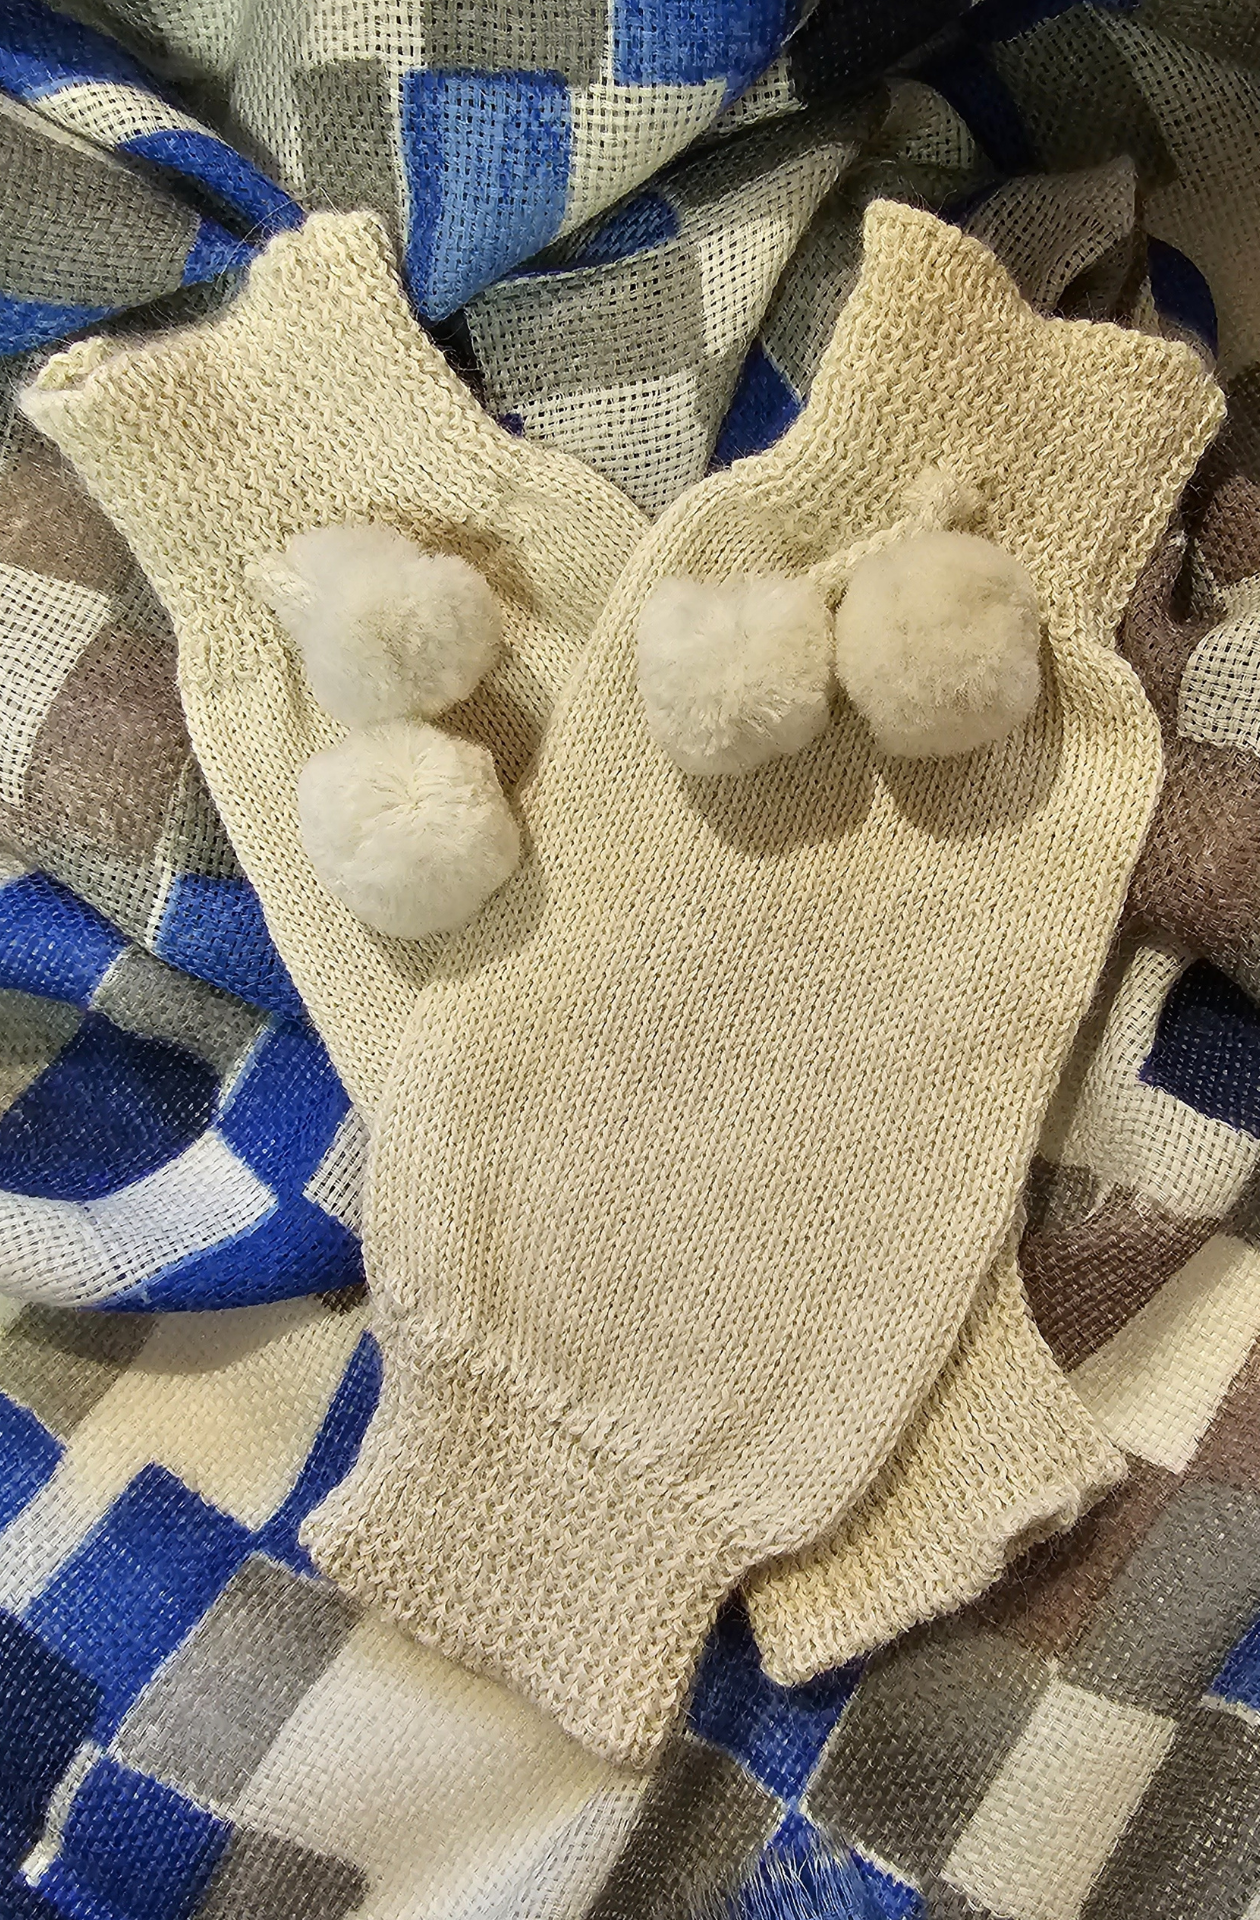 Baby Alpaca Wrist or Arm Warmers, handknitted in Peru.